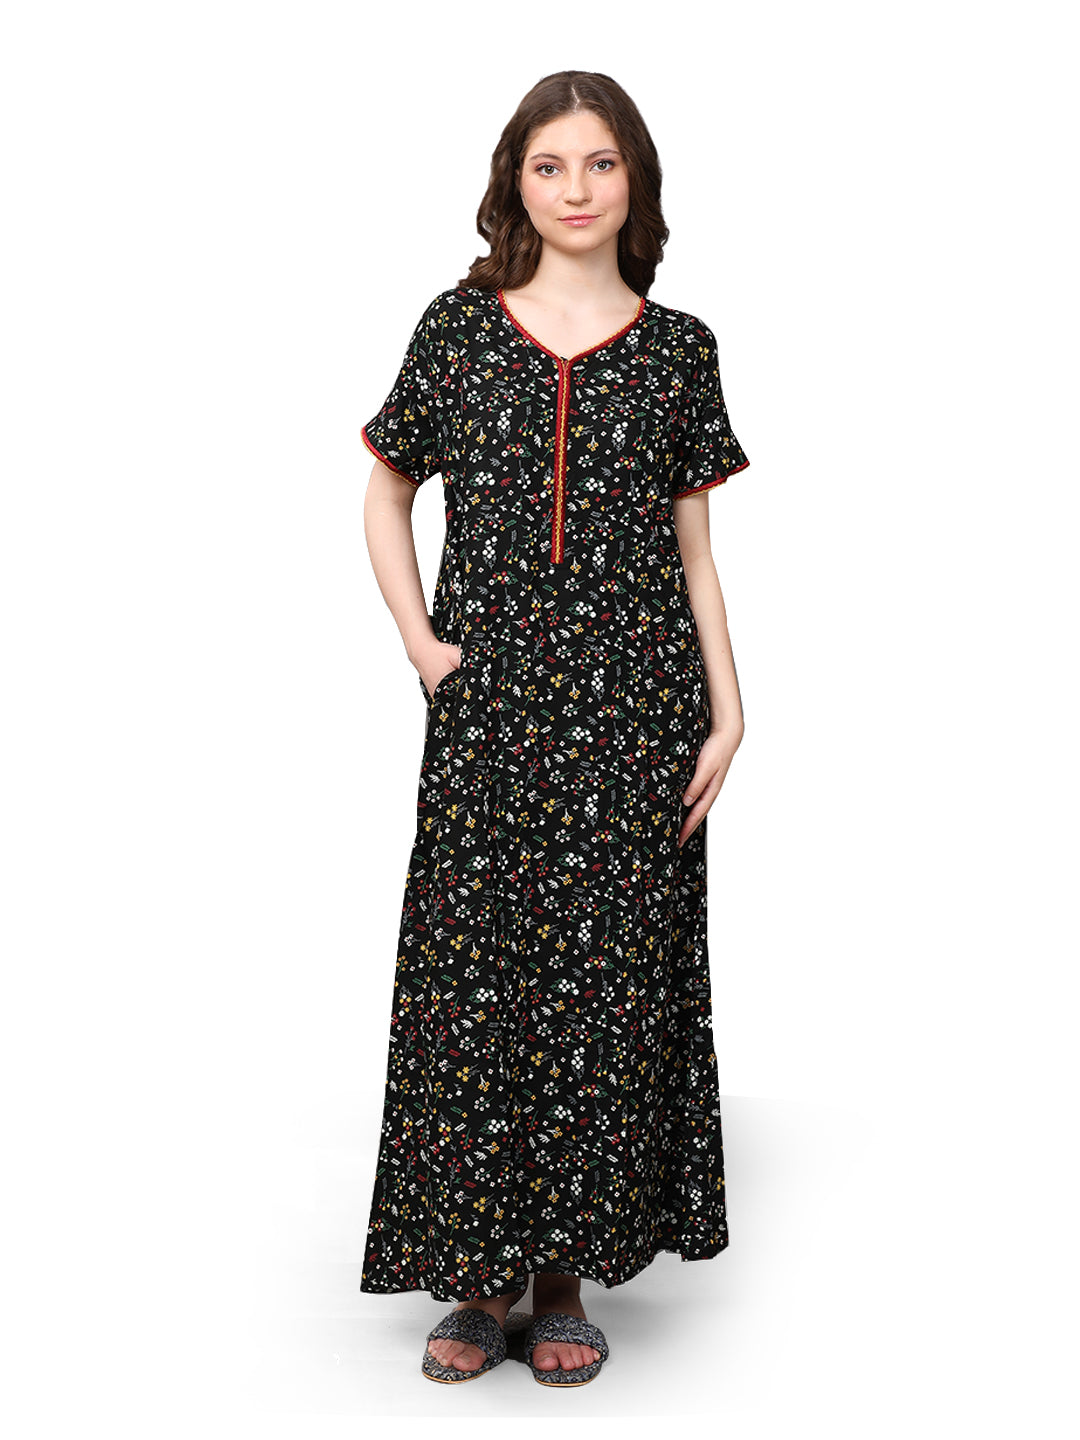 Evolove Women's 100% Viscose Printed Maxi Nightgown Long Nighty Sleepwear for Ladies Super Soft Comfortable Design